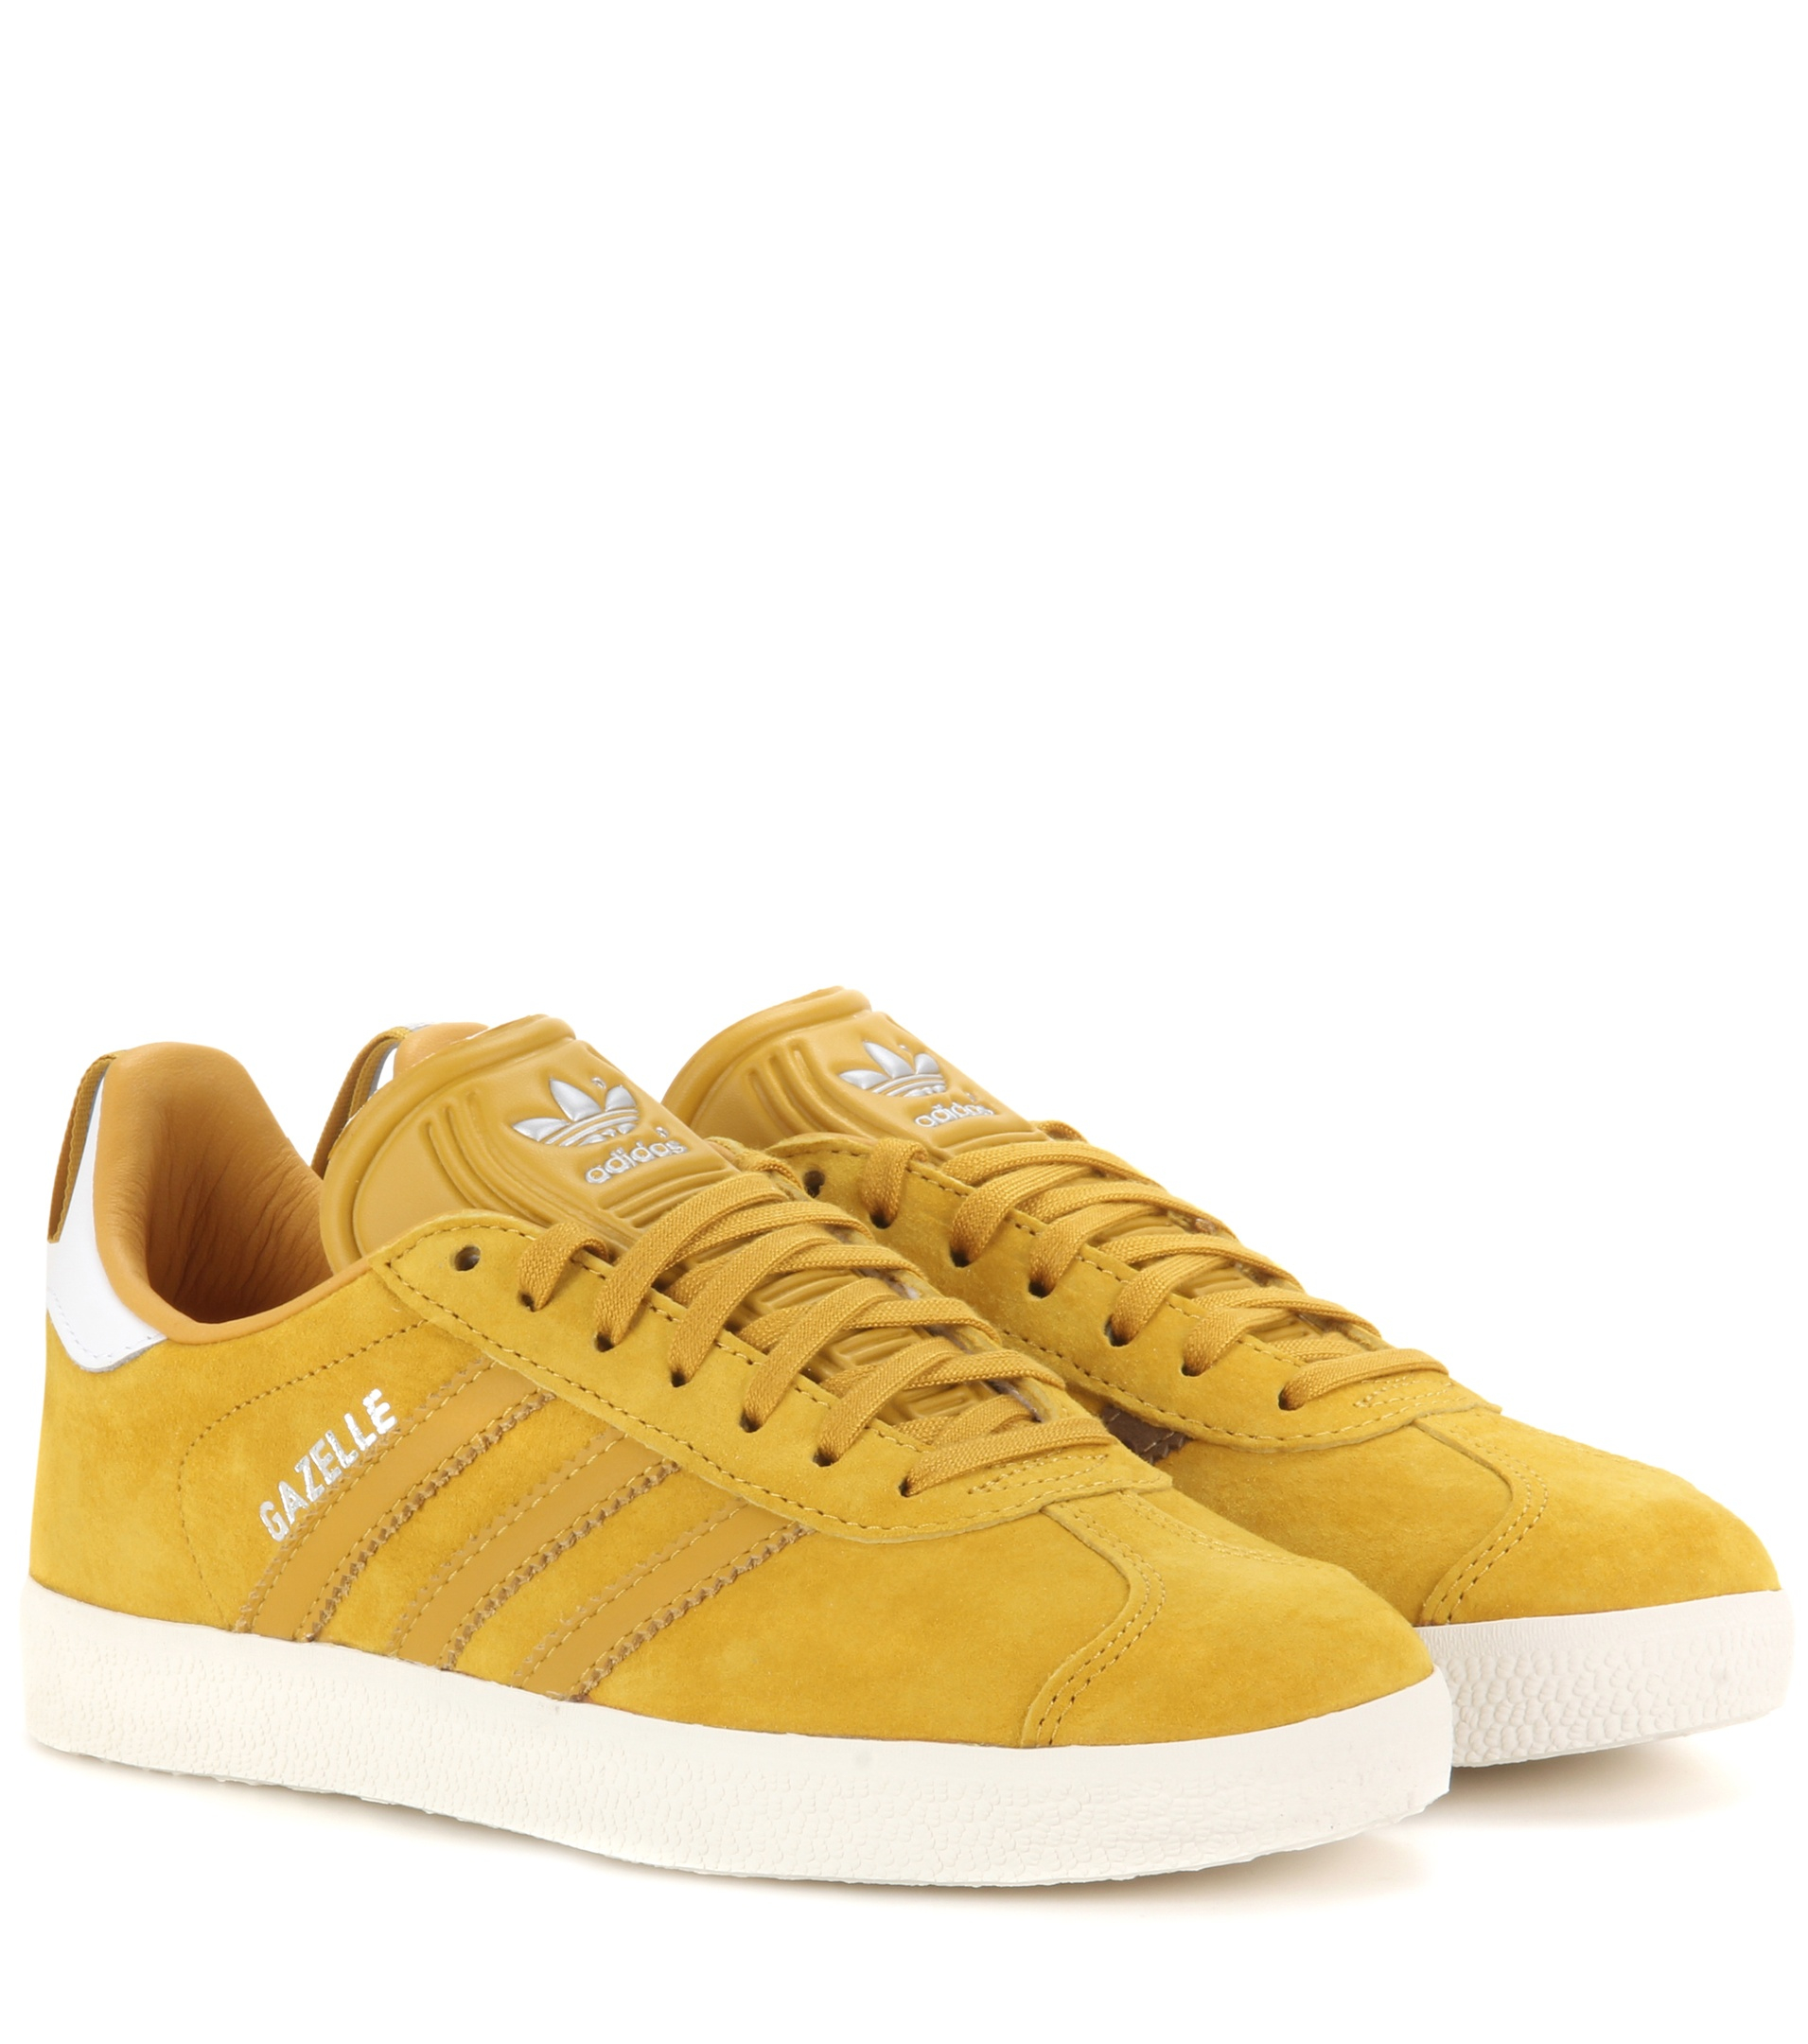 Lyst - Adidas Originals Gazelle Suede Sneakers in Yellow